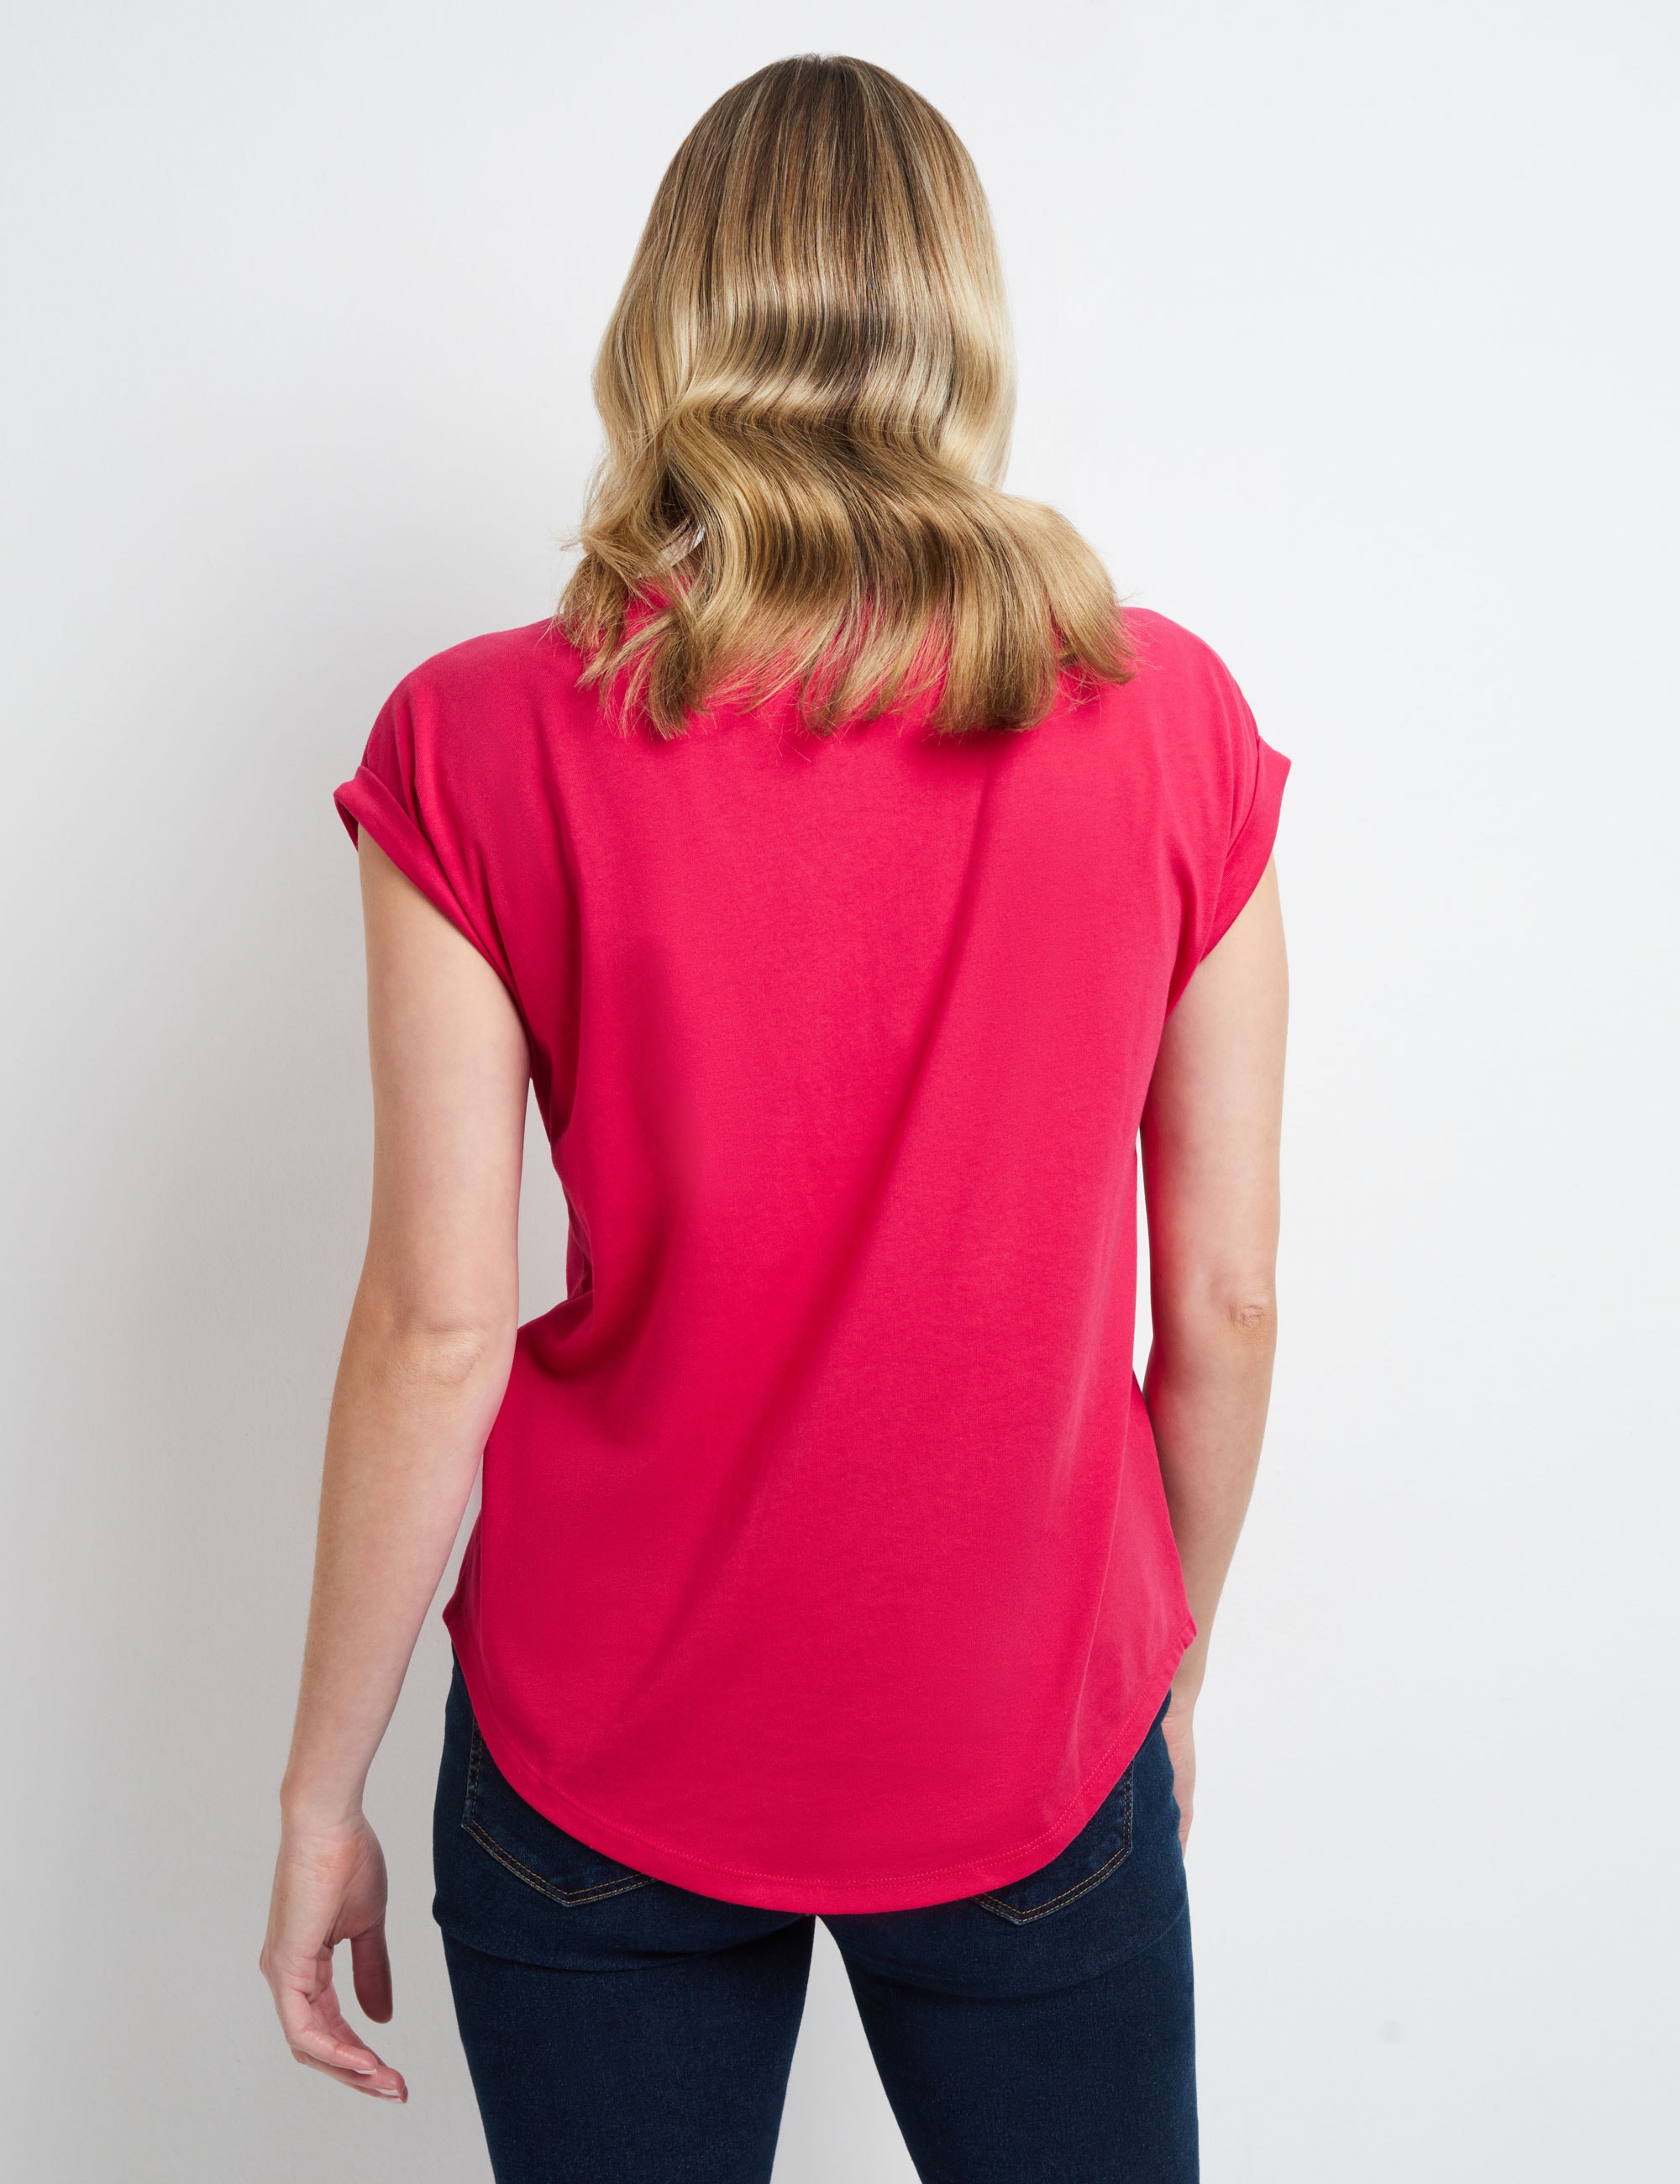 RIVERS - Womens Tops T-Shirt Short | Essential Sleeve eBay 